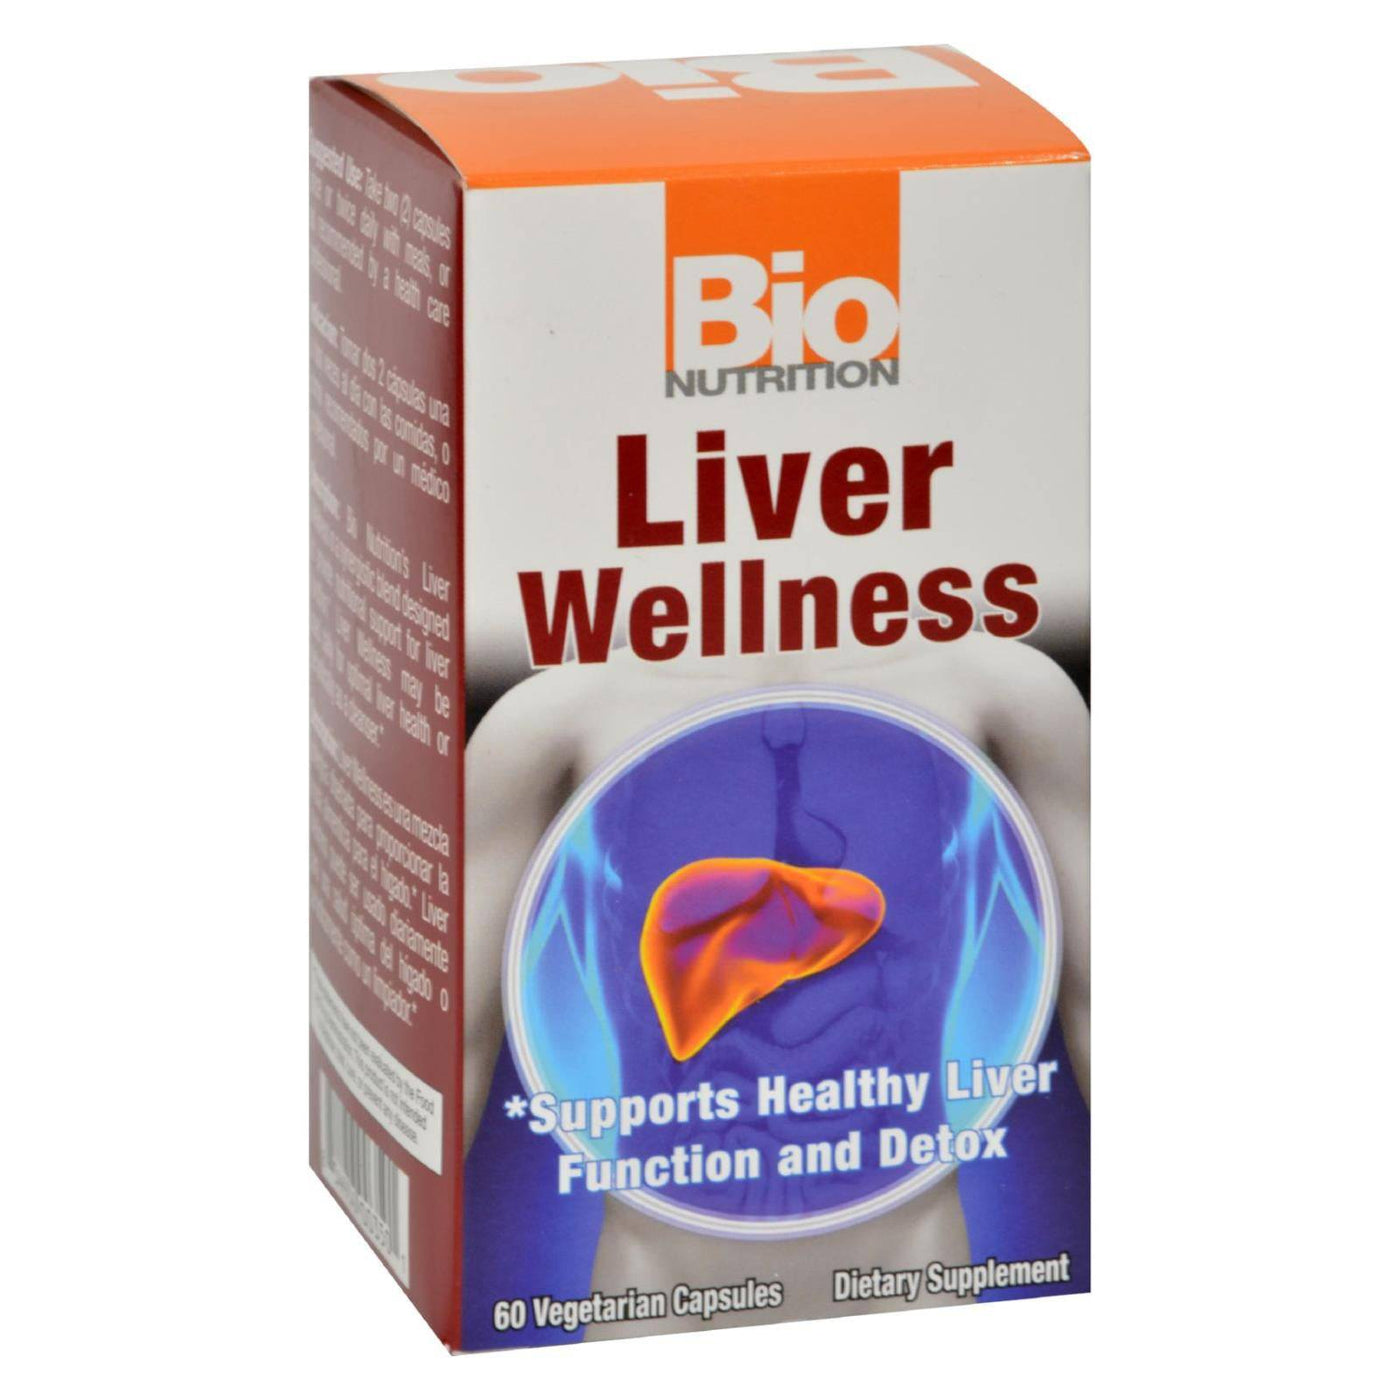 Bio Nutrition - Liver Wellness - 60 Vegetarian Capsules | OnlyNaturals.us